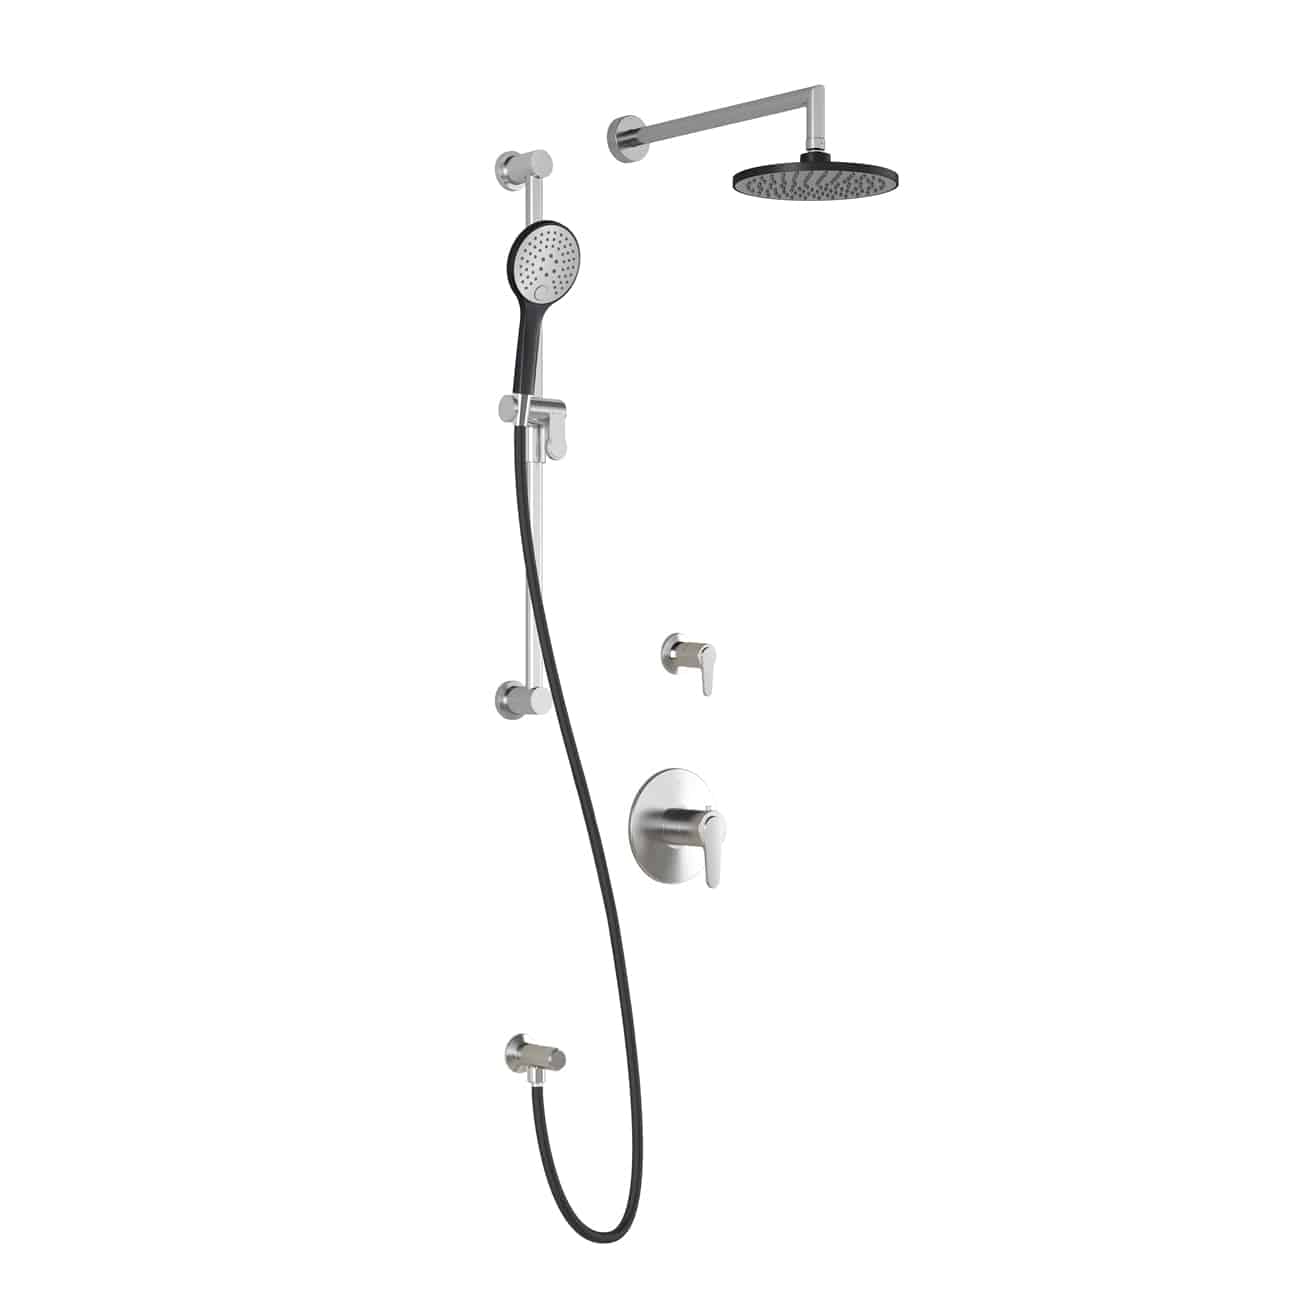 Kalia KONTOUR T2 AQUATONIK T/P Shower Kit System with Wall Arm and 8" Round Rain Shower Head- Black/Chrome